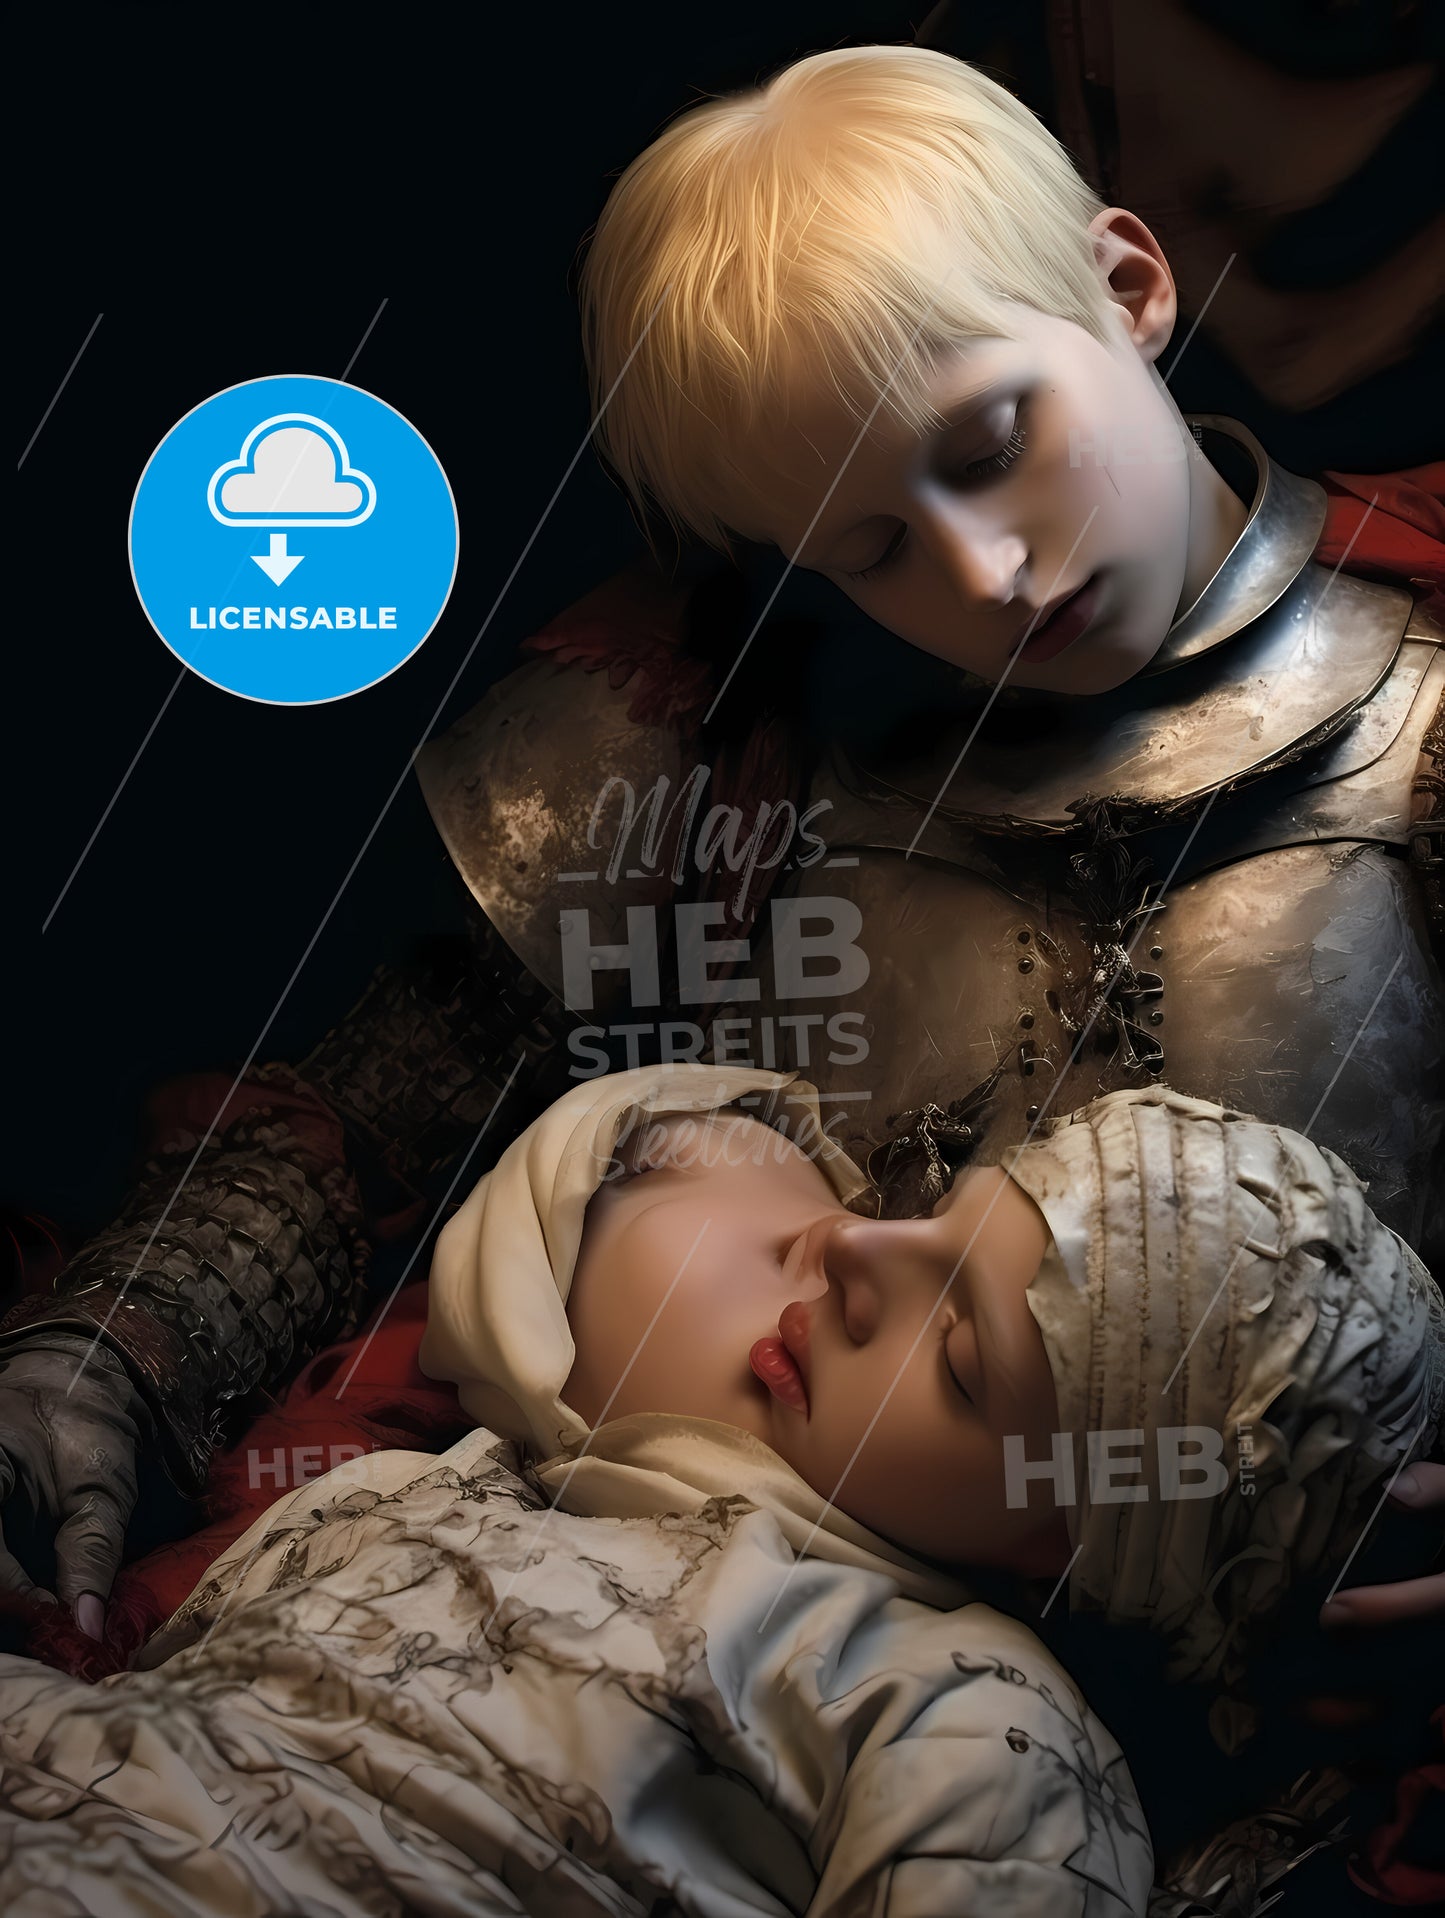 The Tragic Death Of The Albino Boy, A Boy In Armor Holding A Sleeping Woman